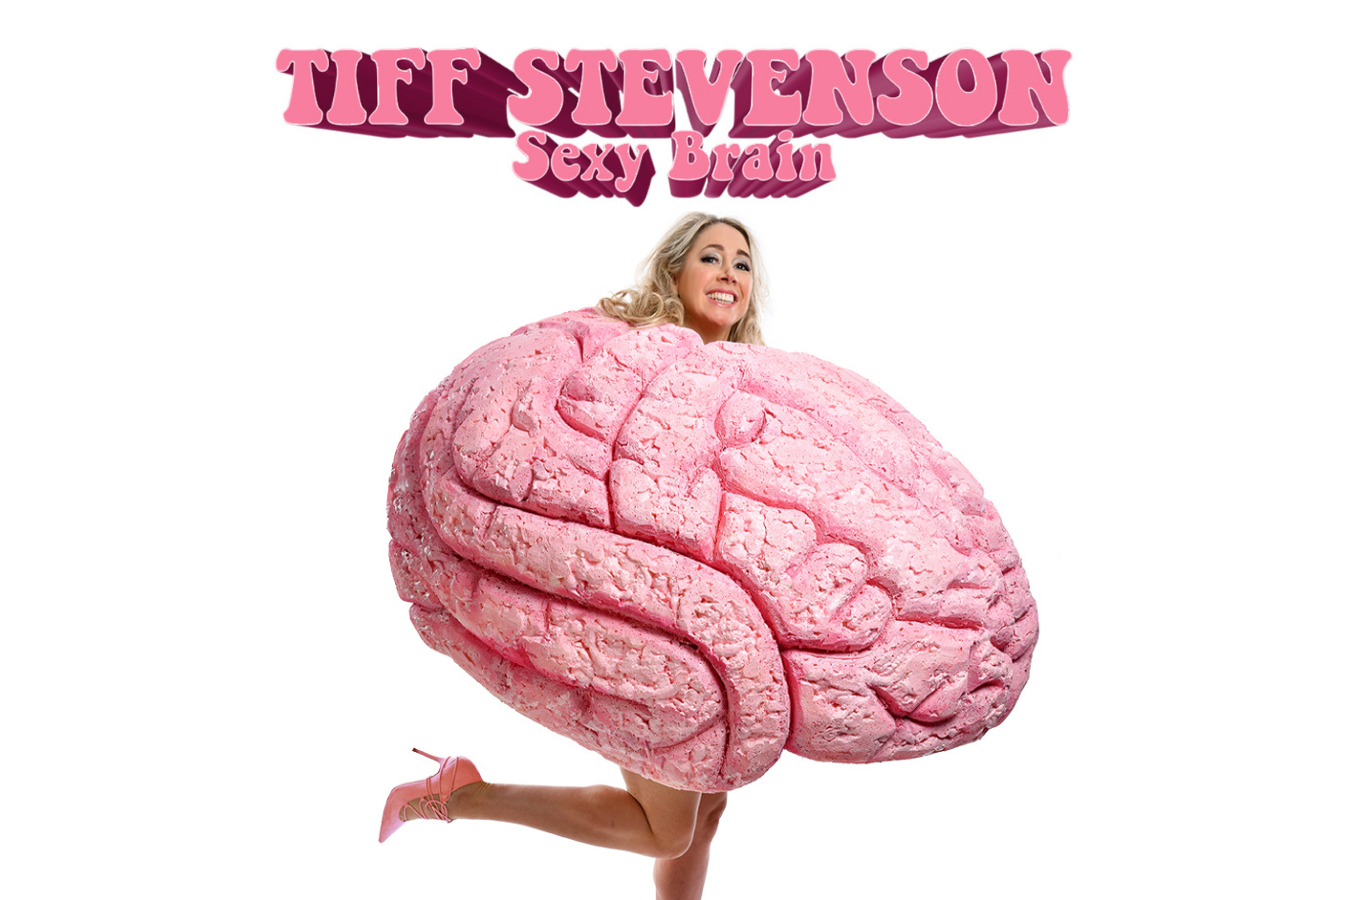 ***** for Tiff Stevenson's Sexy Brain